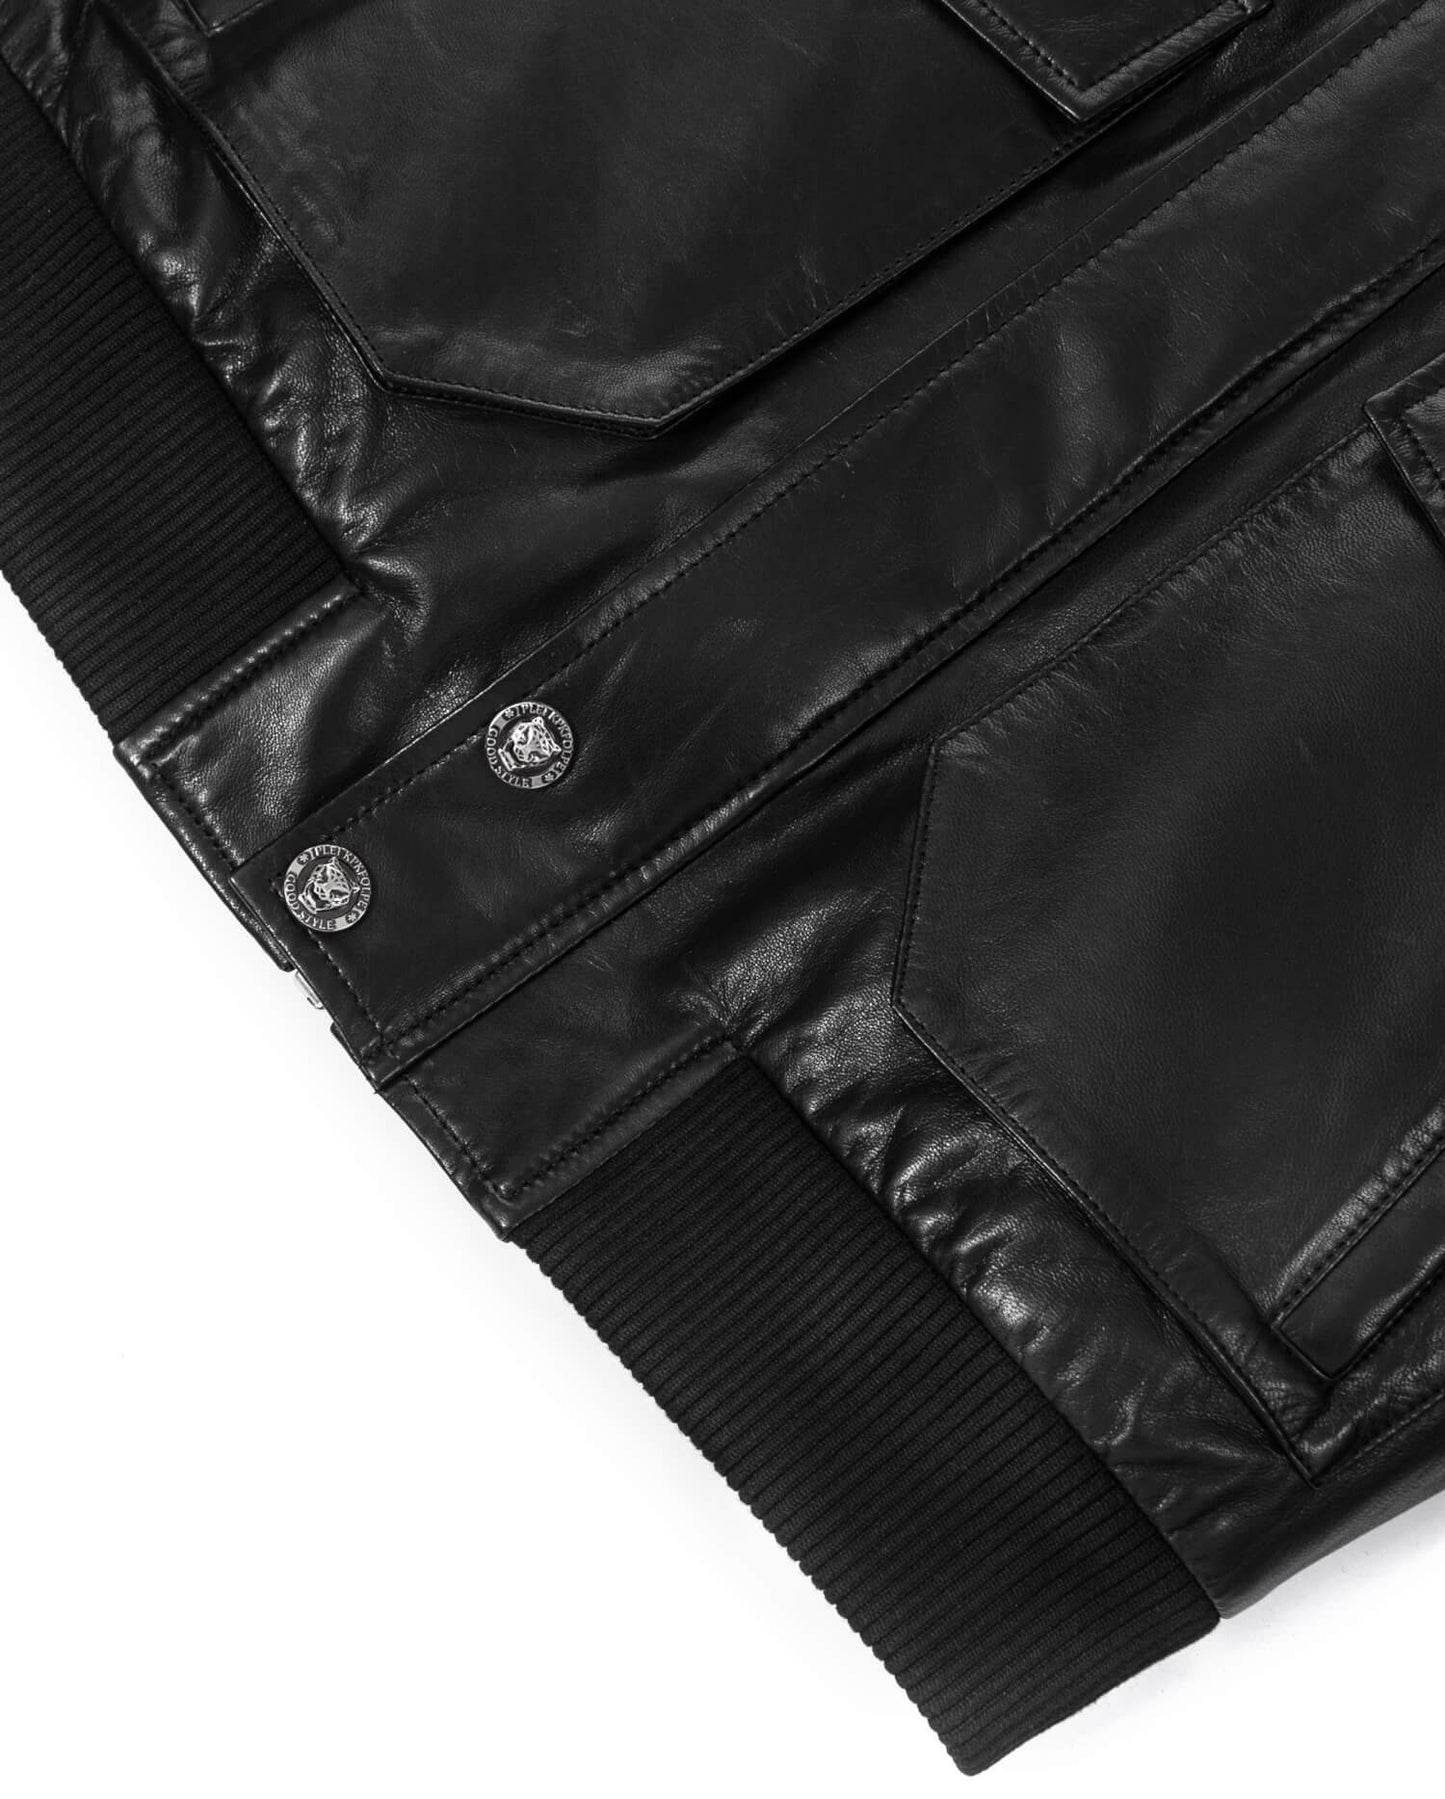 Black Patched Fur Collar Genuine Leather Bomber Jacket